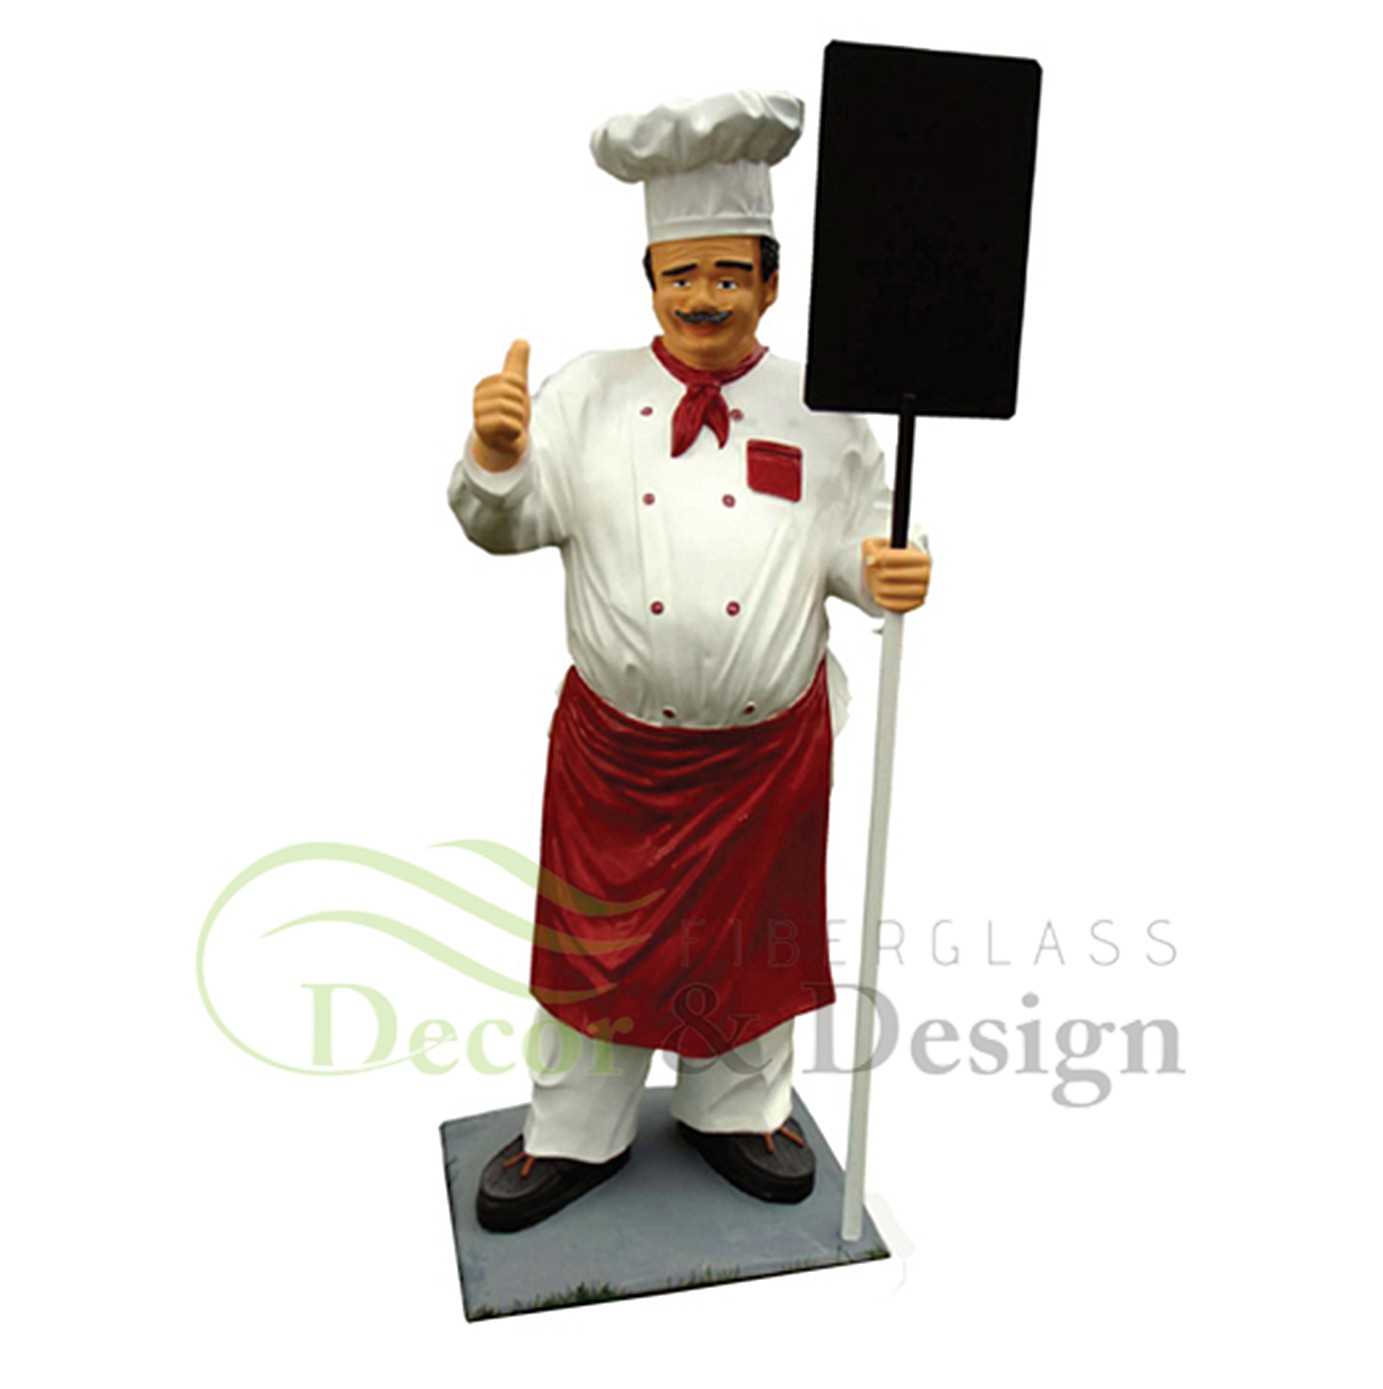 z sp. Design menu Chef Decor figure witch Fiberglass & Decorative Statue -